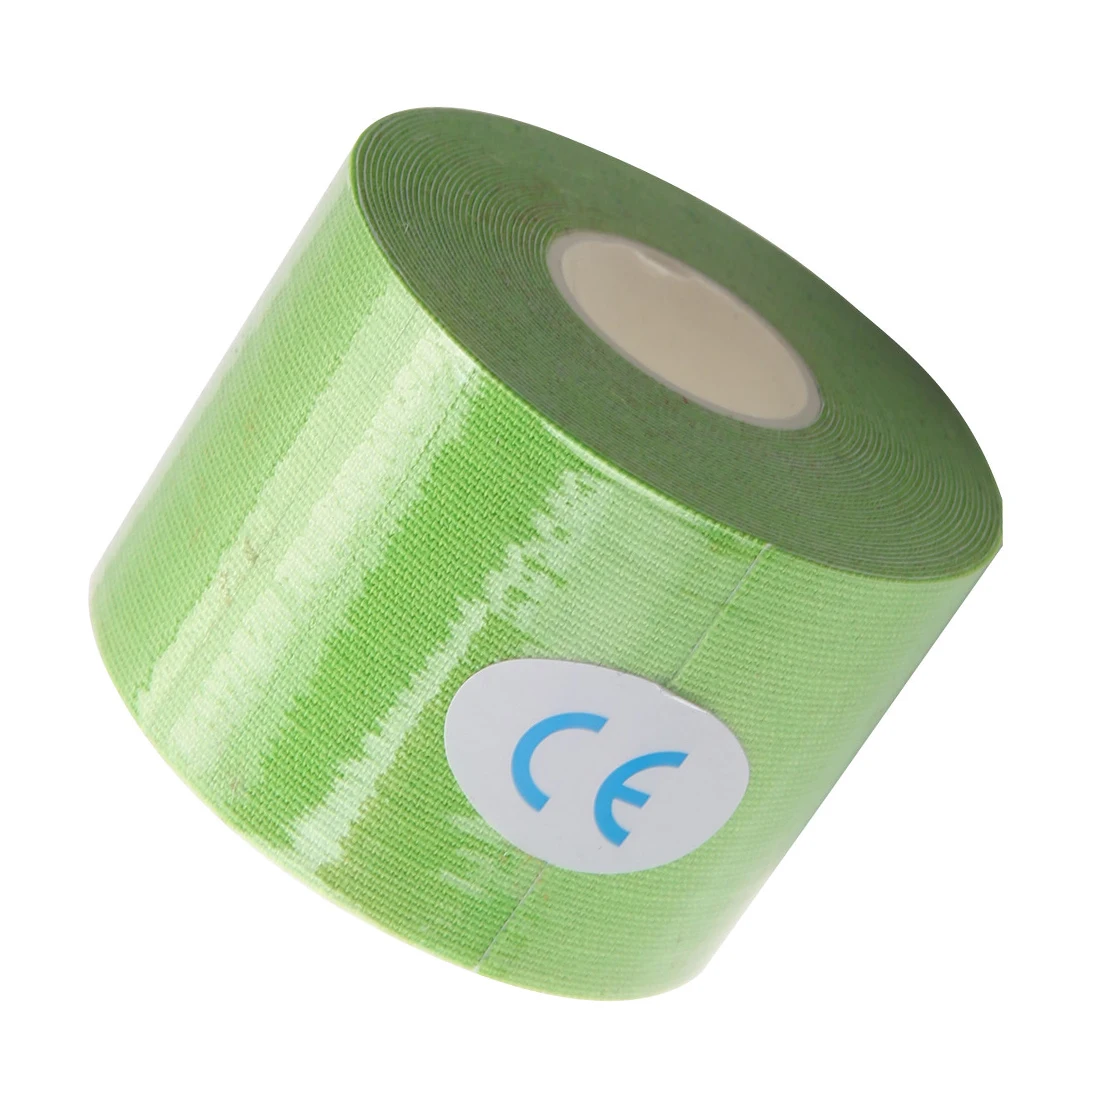 2,5 см х 5 м водонепроницаемая лента Спортивная кинезиологическая лента спортивная лента обвязочная лента для баскетбола Футбол rodilleras deportivas Muscle tape - Цвет: Зеленый